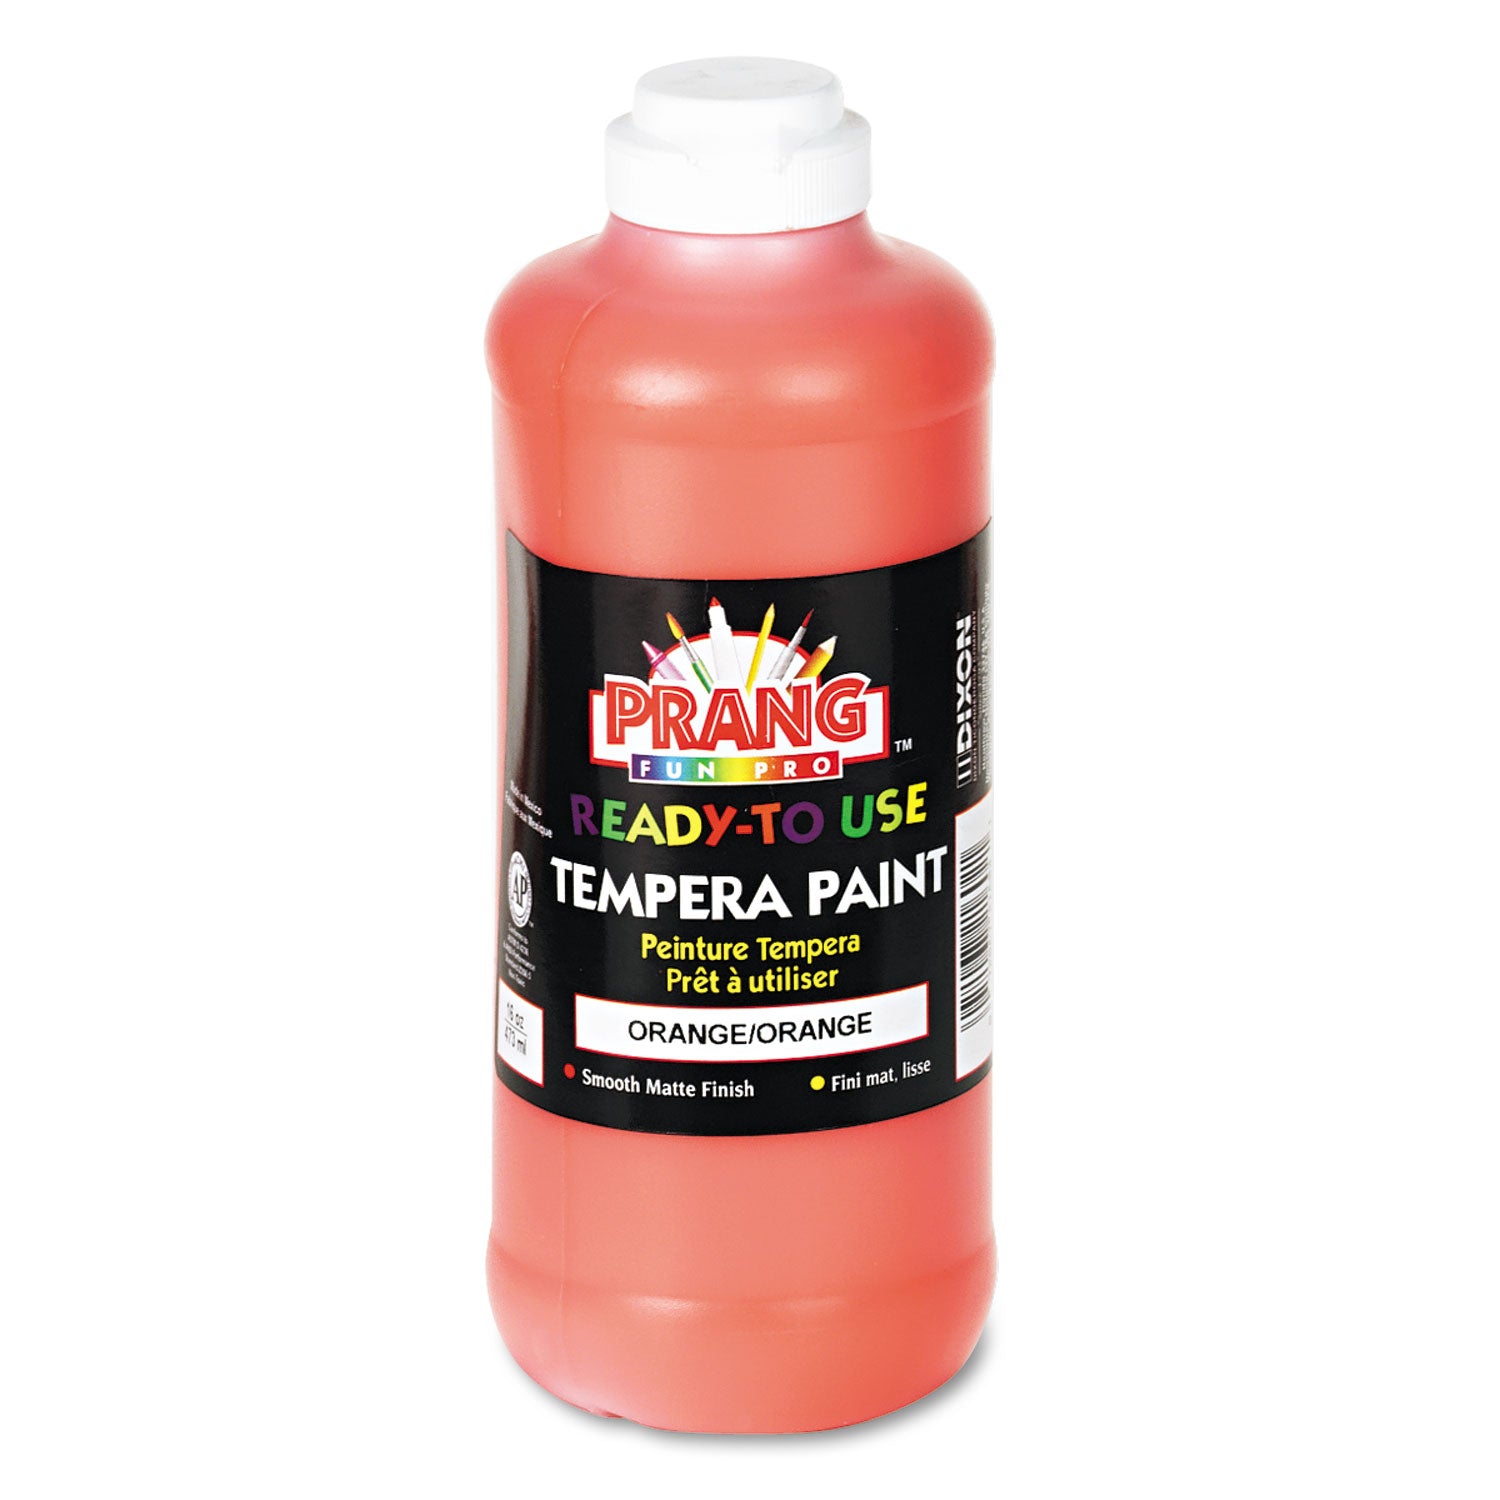 Ready-to-Use Tempera Paint, Orange, 16 oz Dispenser-Cap Bottle - 